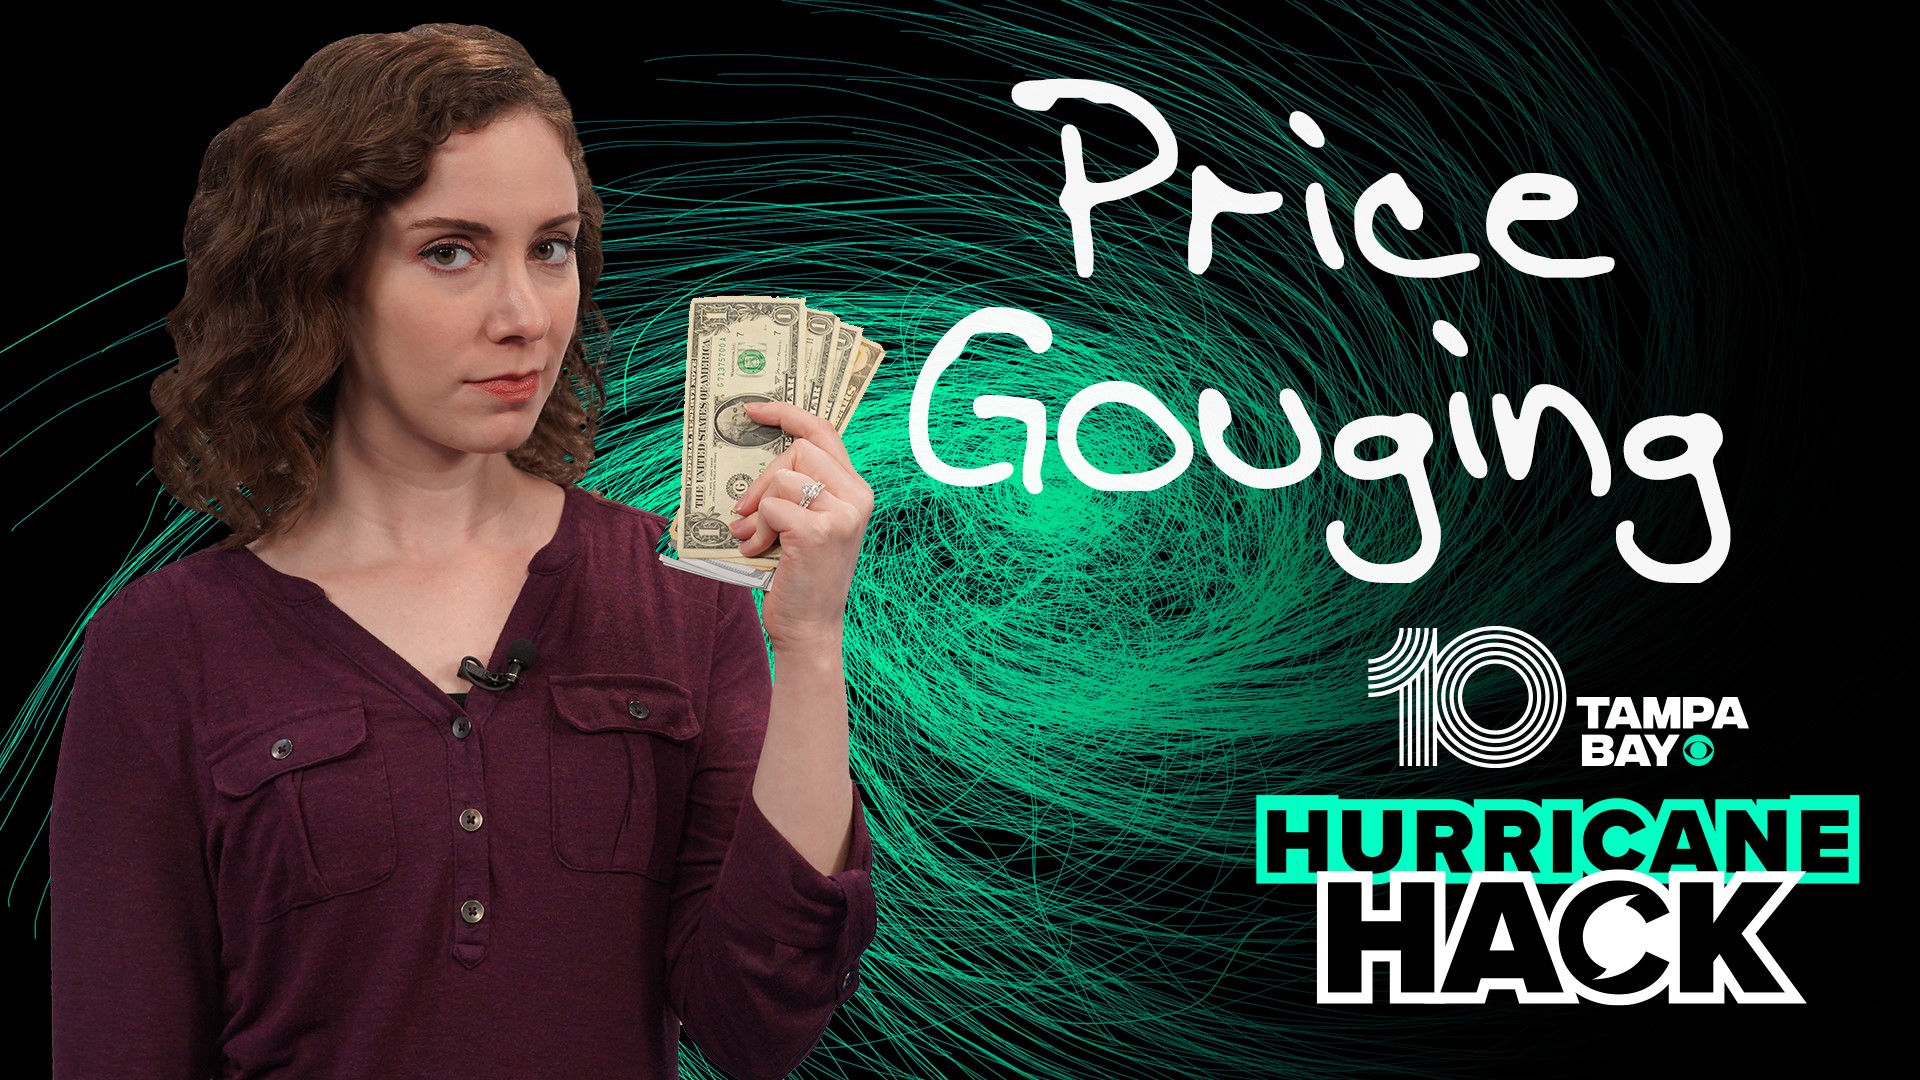 10 Investigates' Jenna Bourne explains how to report price gouging concerns in Florida.